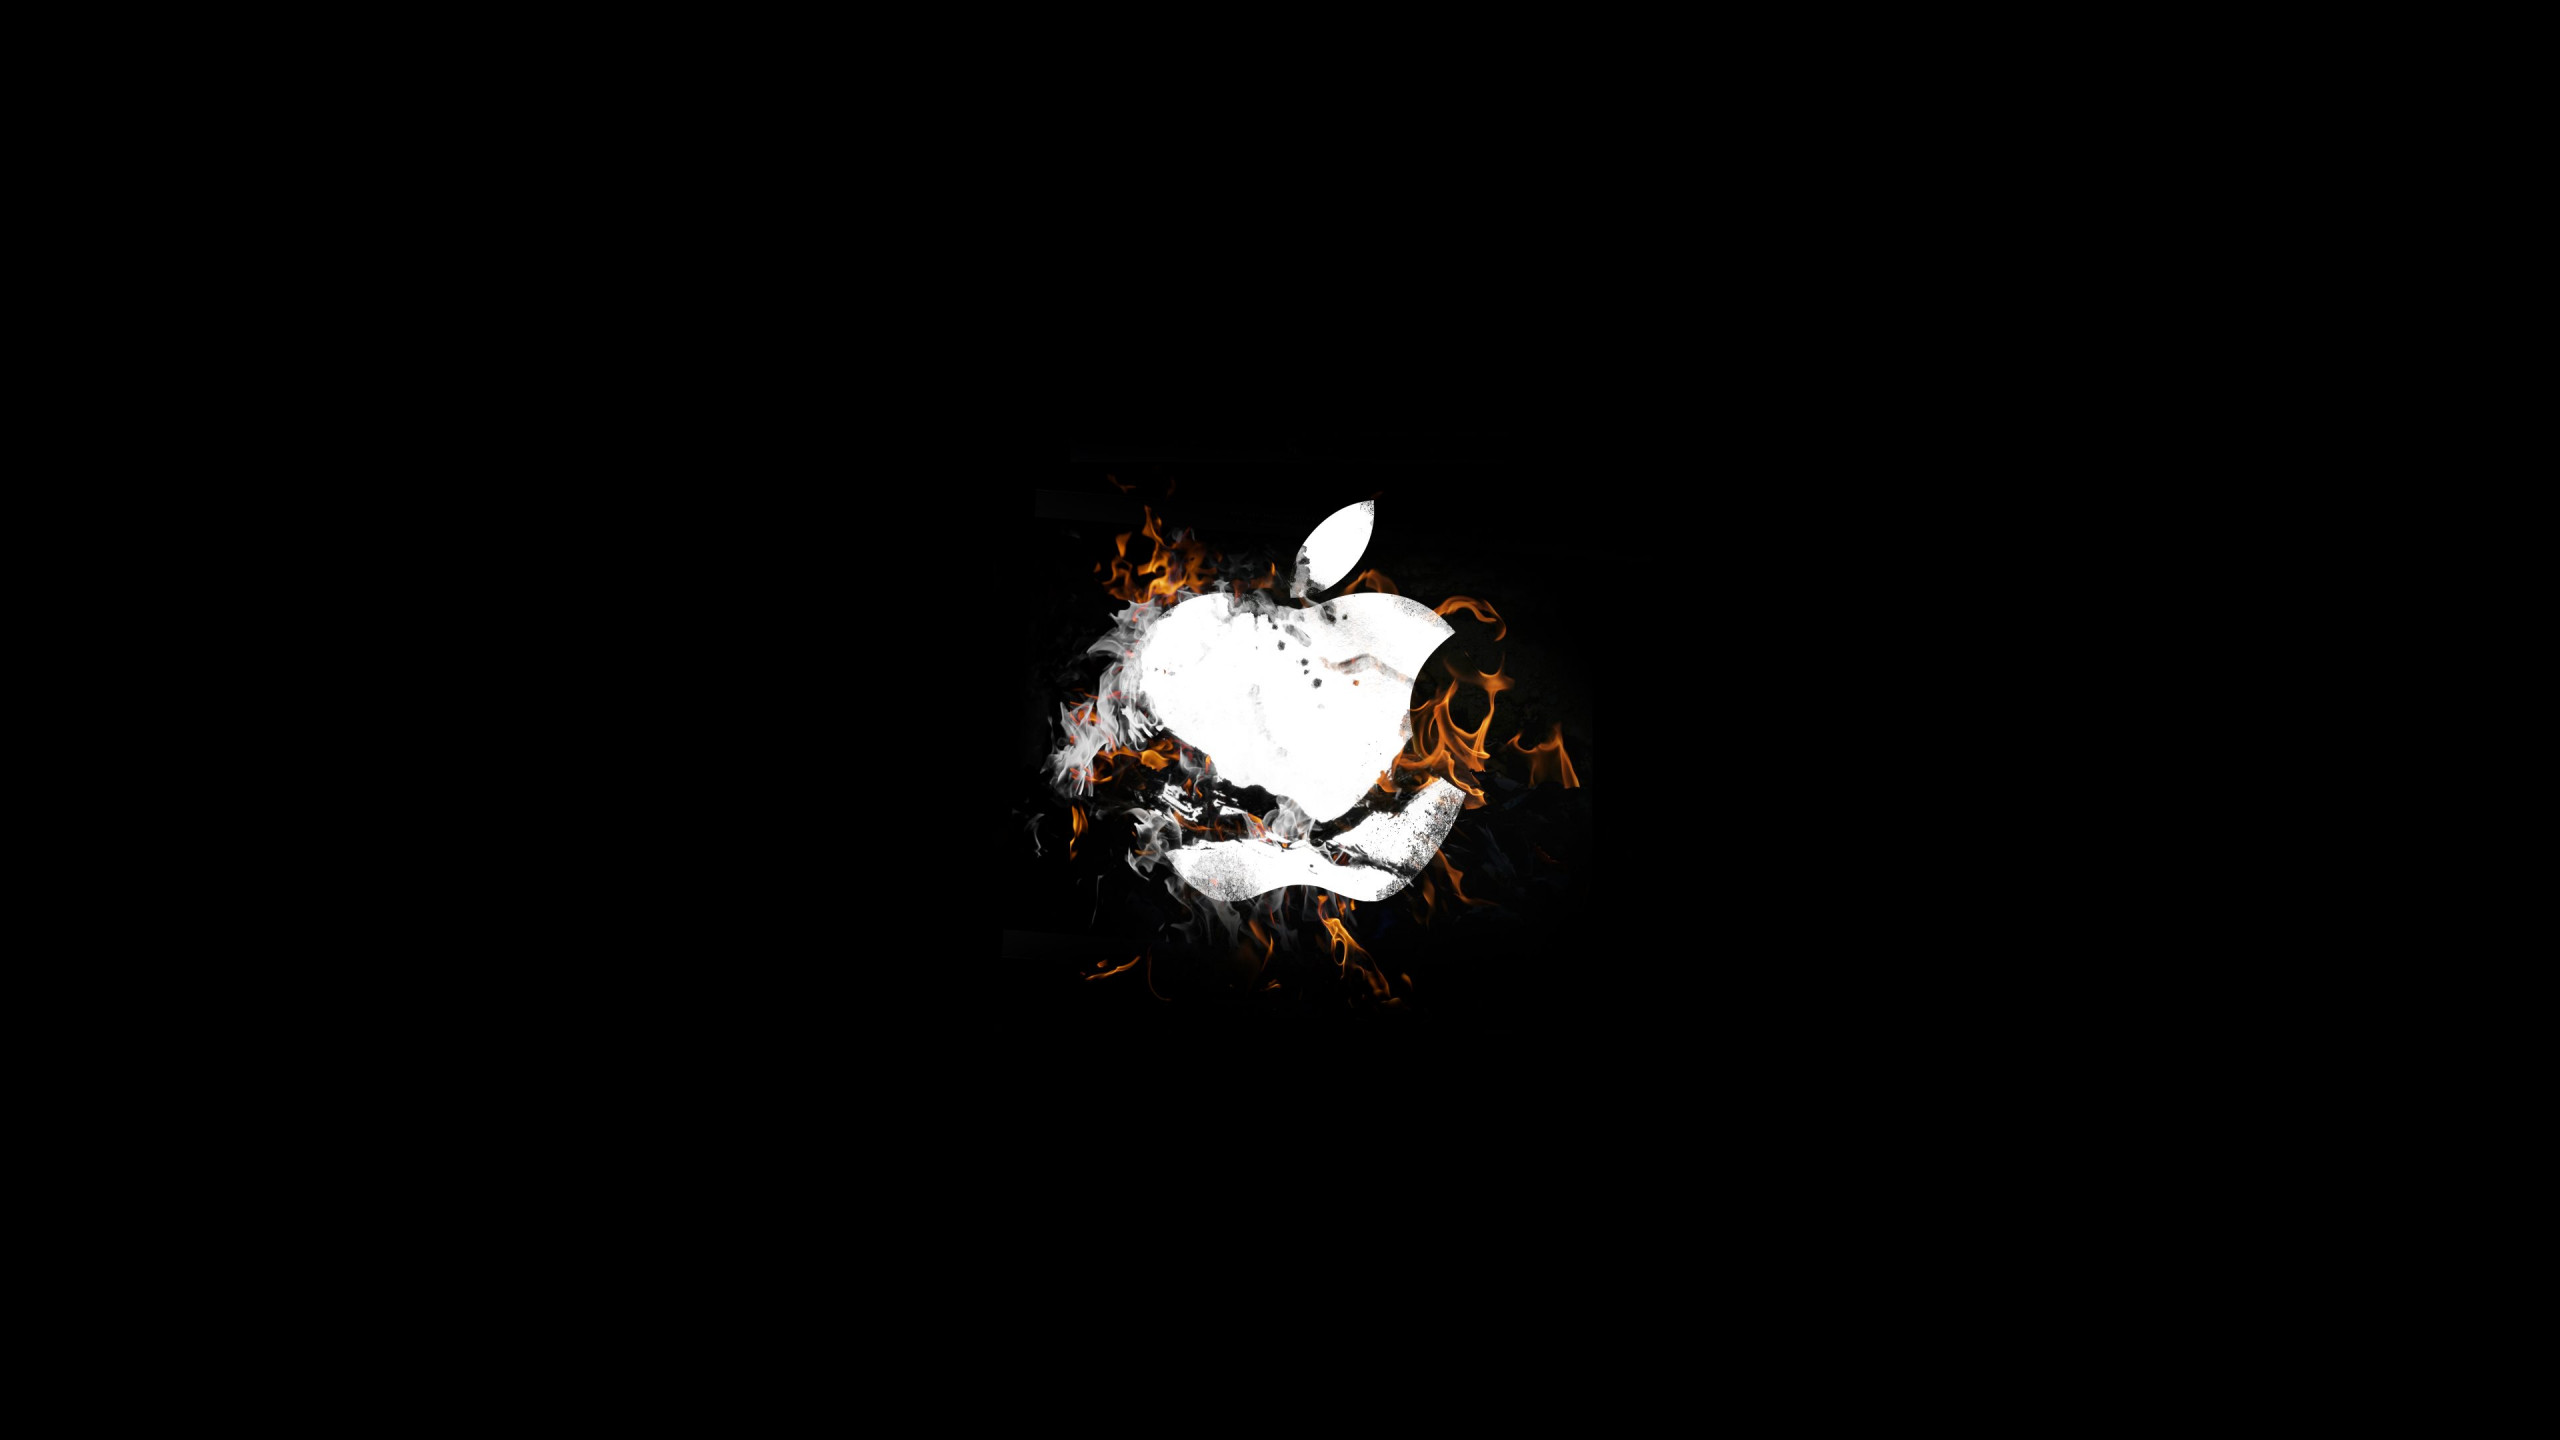 The Apple is on fire wallpaper 2560x1440